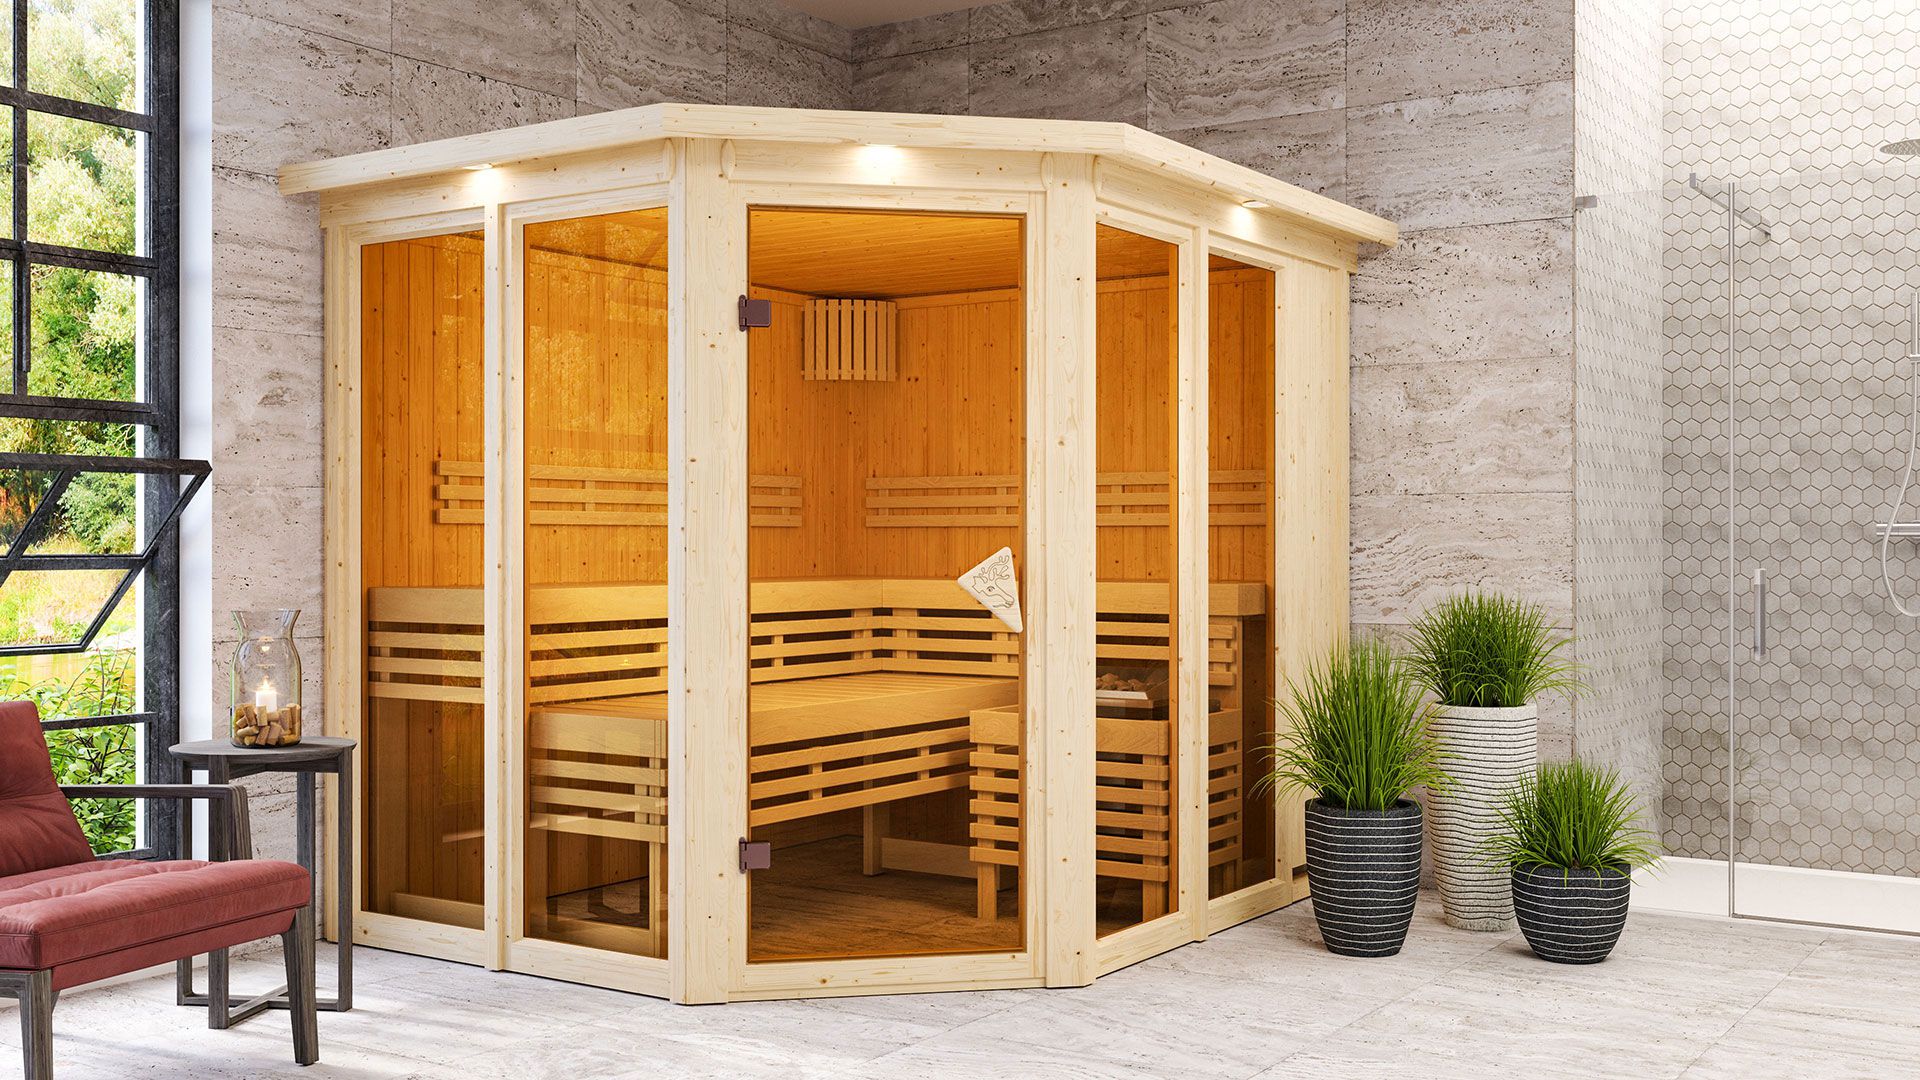 Alvara" sauna met bronskleurige deur en rand - kleur: naturel - 245 x 210 x 202 cm (B x D x H)